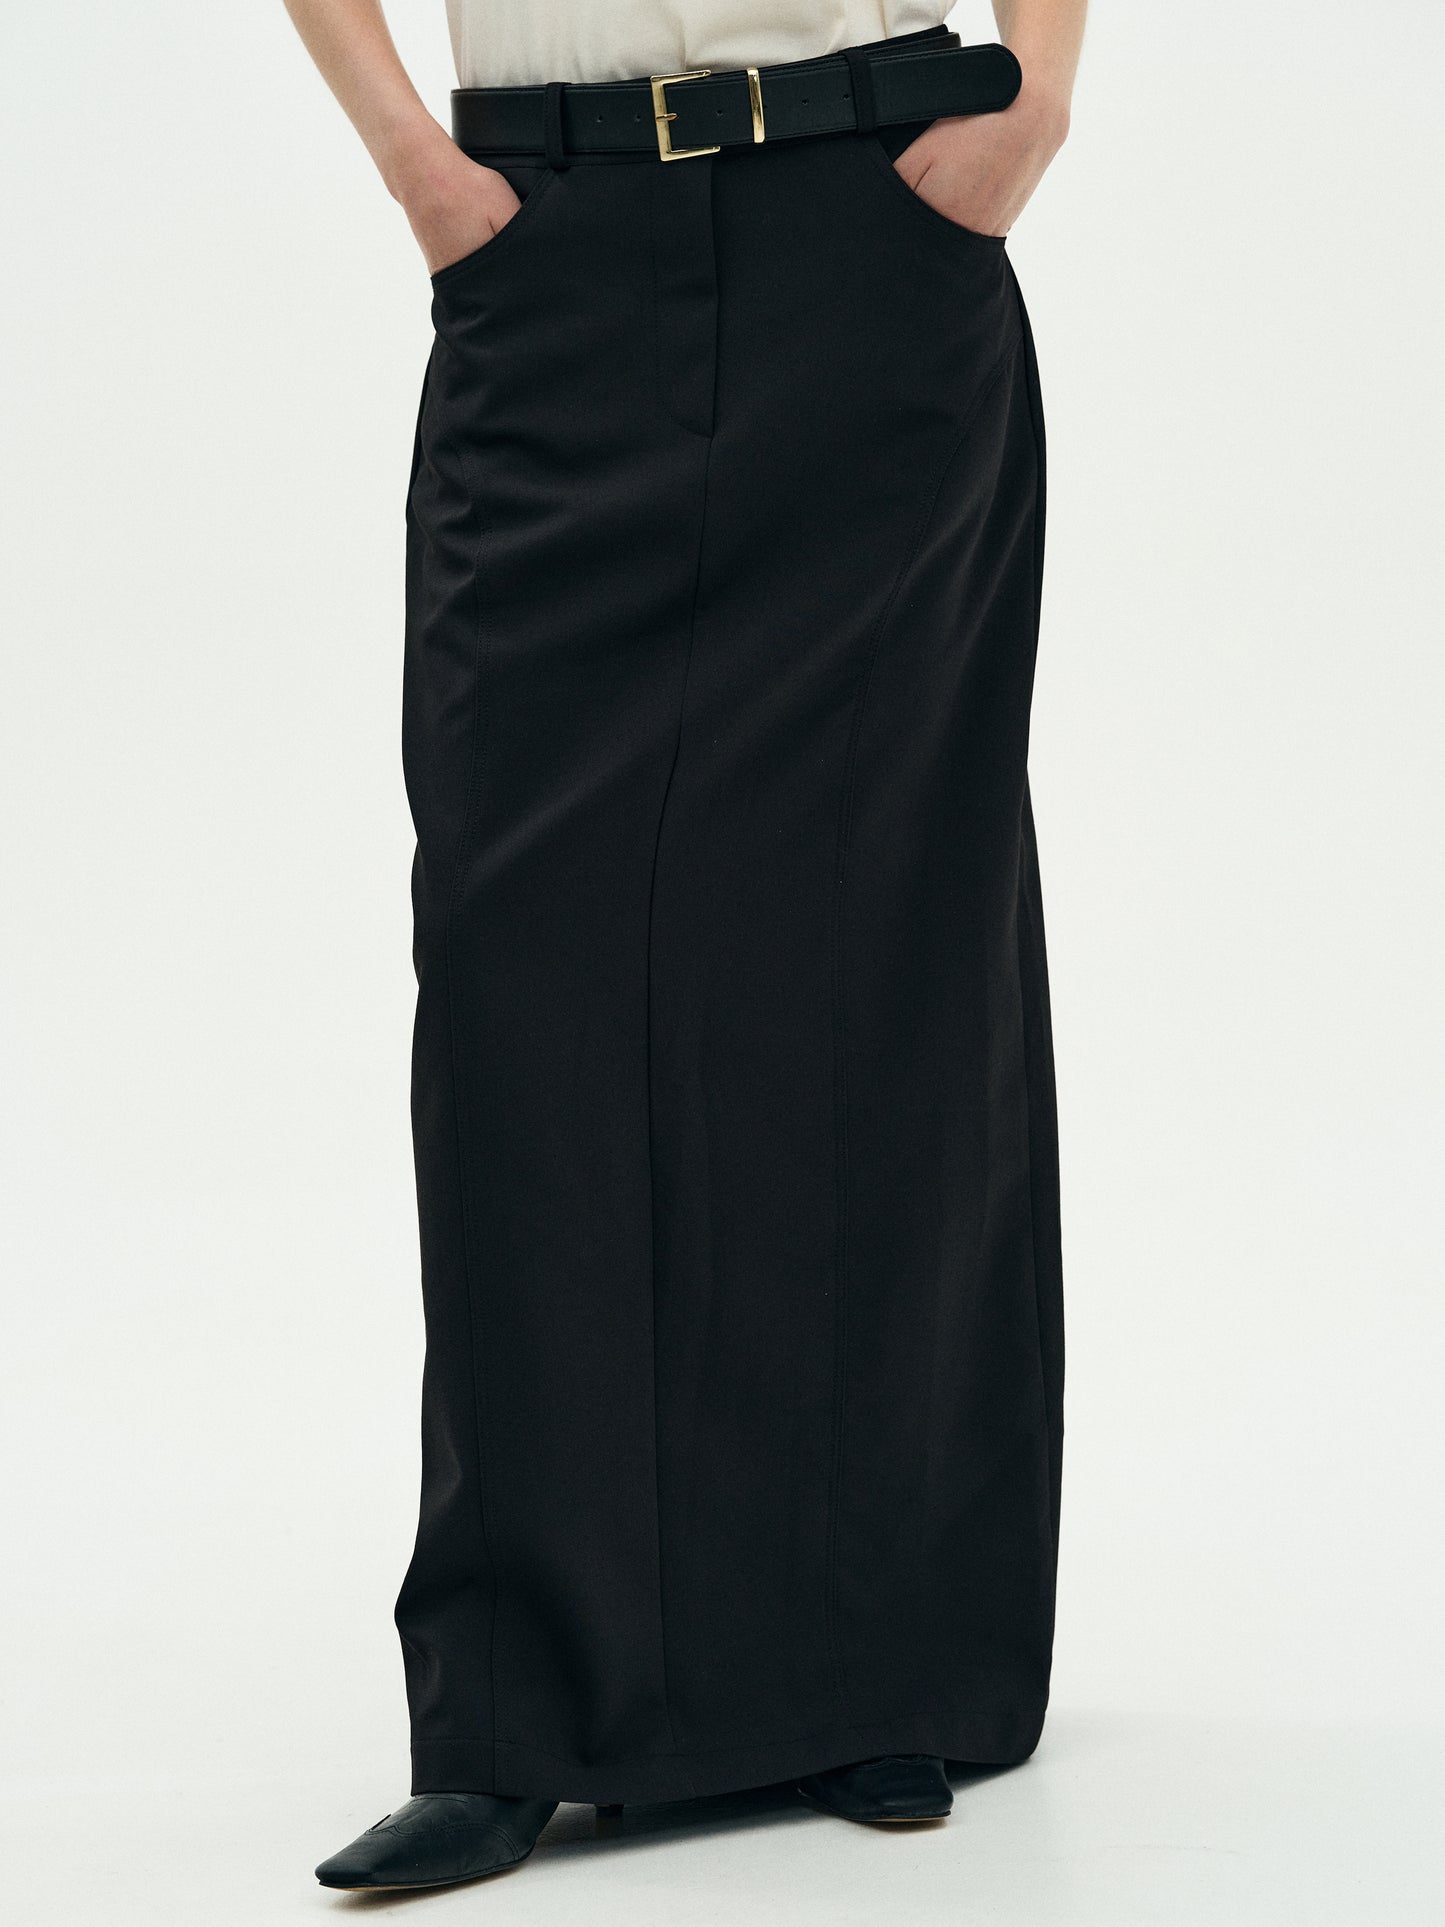 Galliga Long Pencil Skirt, Black